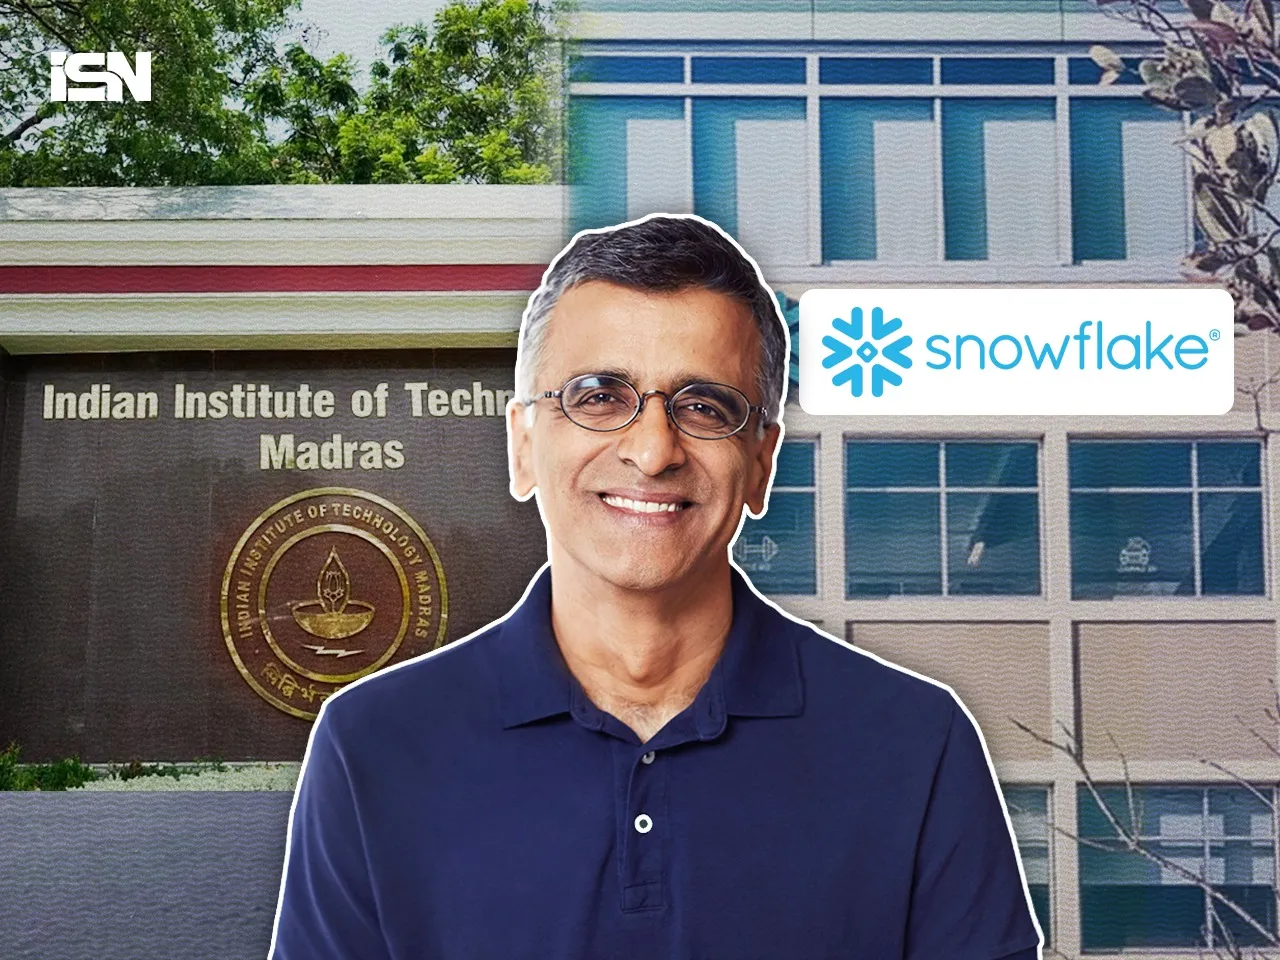 Meet IITian Sridhar Ramaswamy, the newest CEO of US-based Snowflake